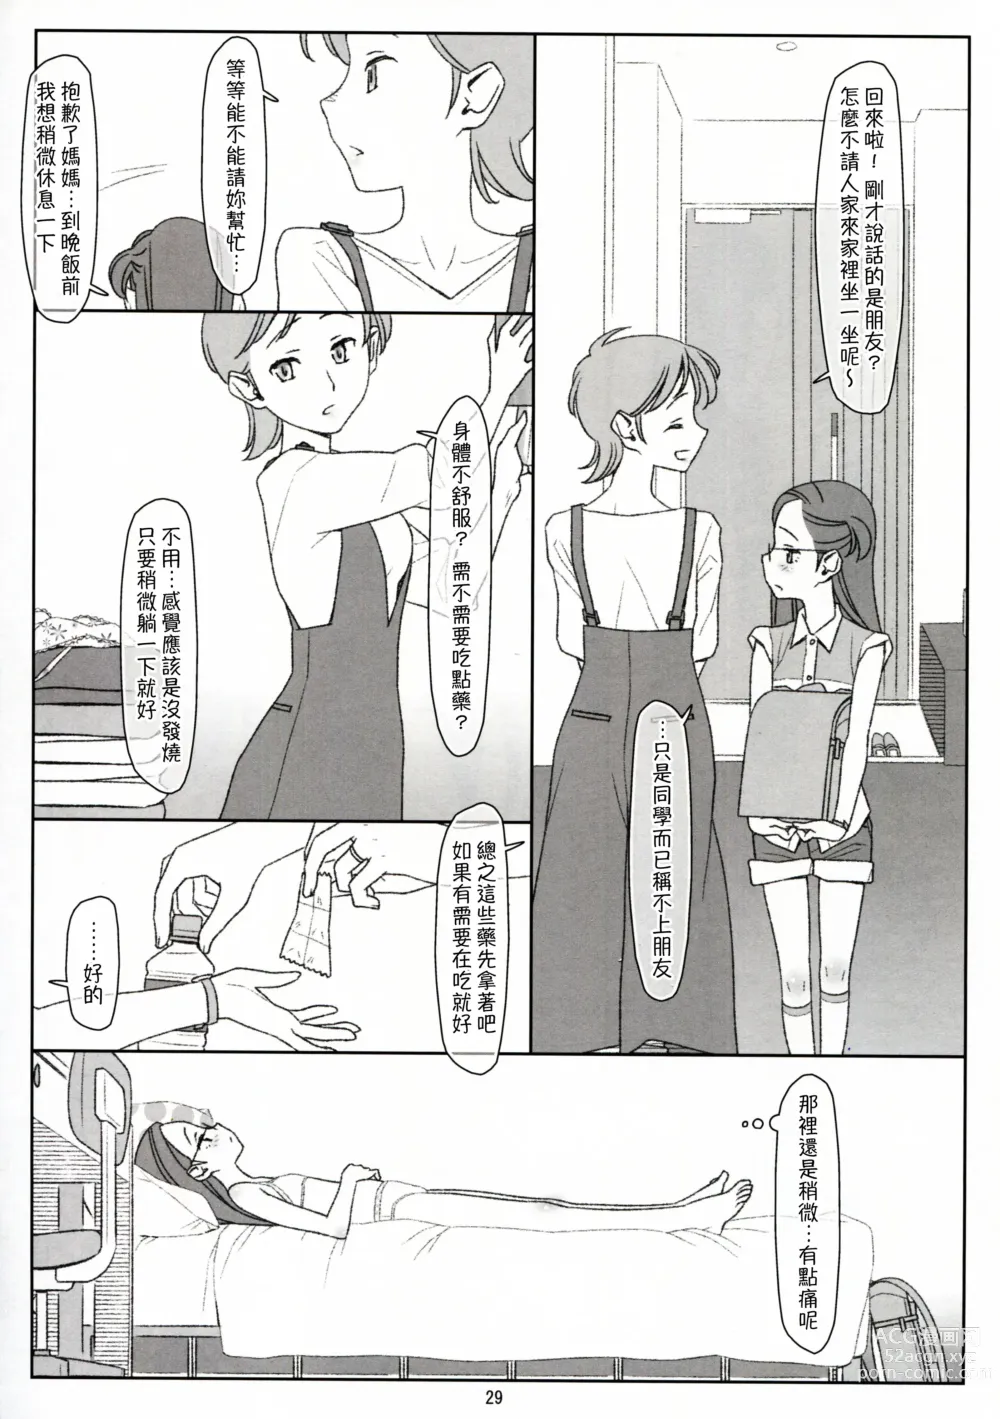 Page 55 of doujinshi Bokutachi no Super App + ②